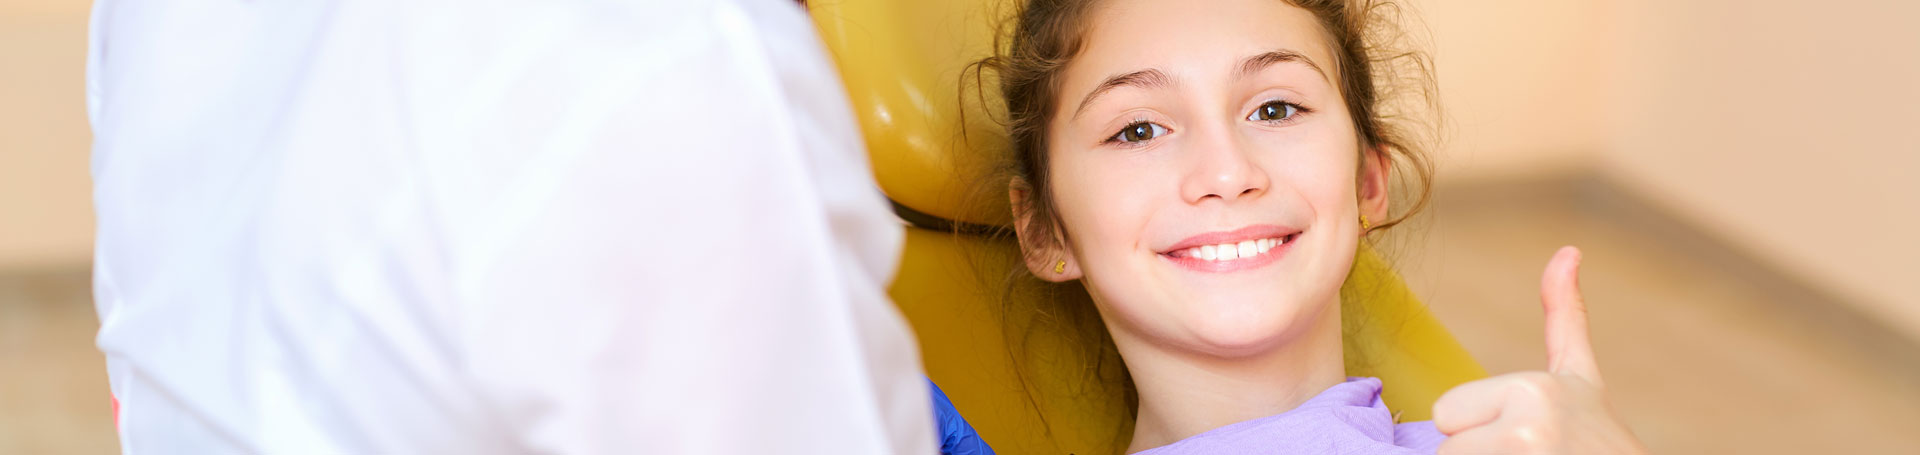 Woman dentist treats child's teeth